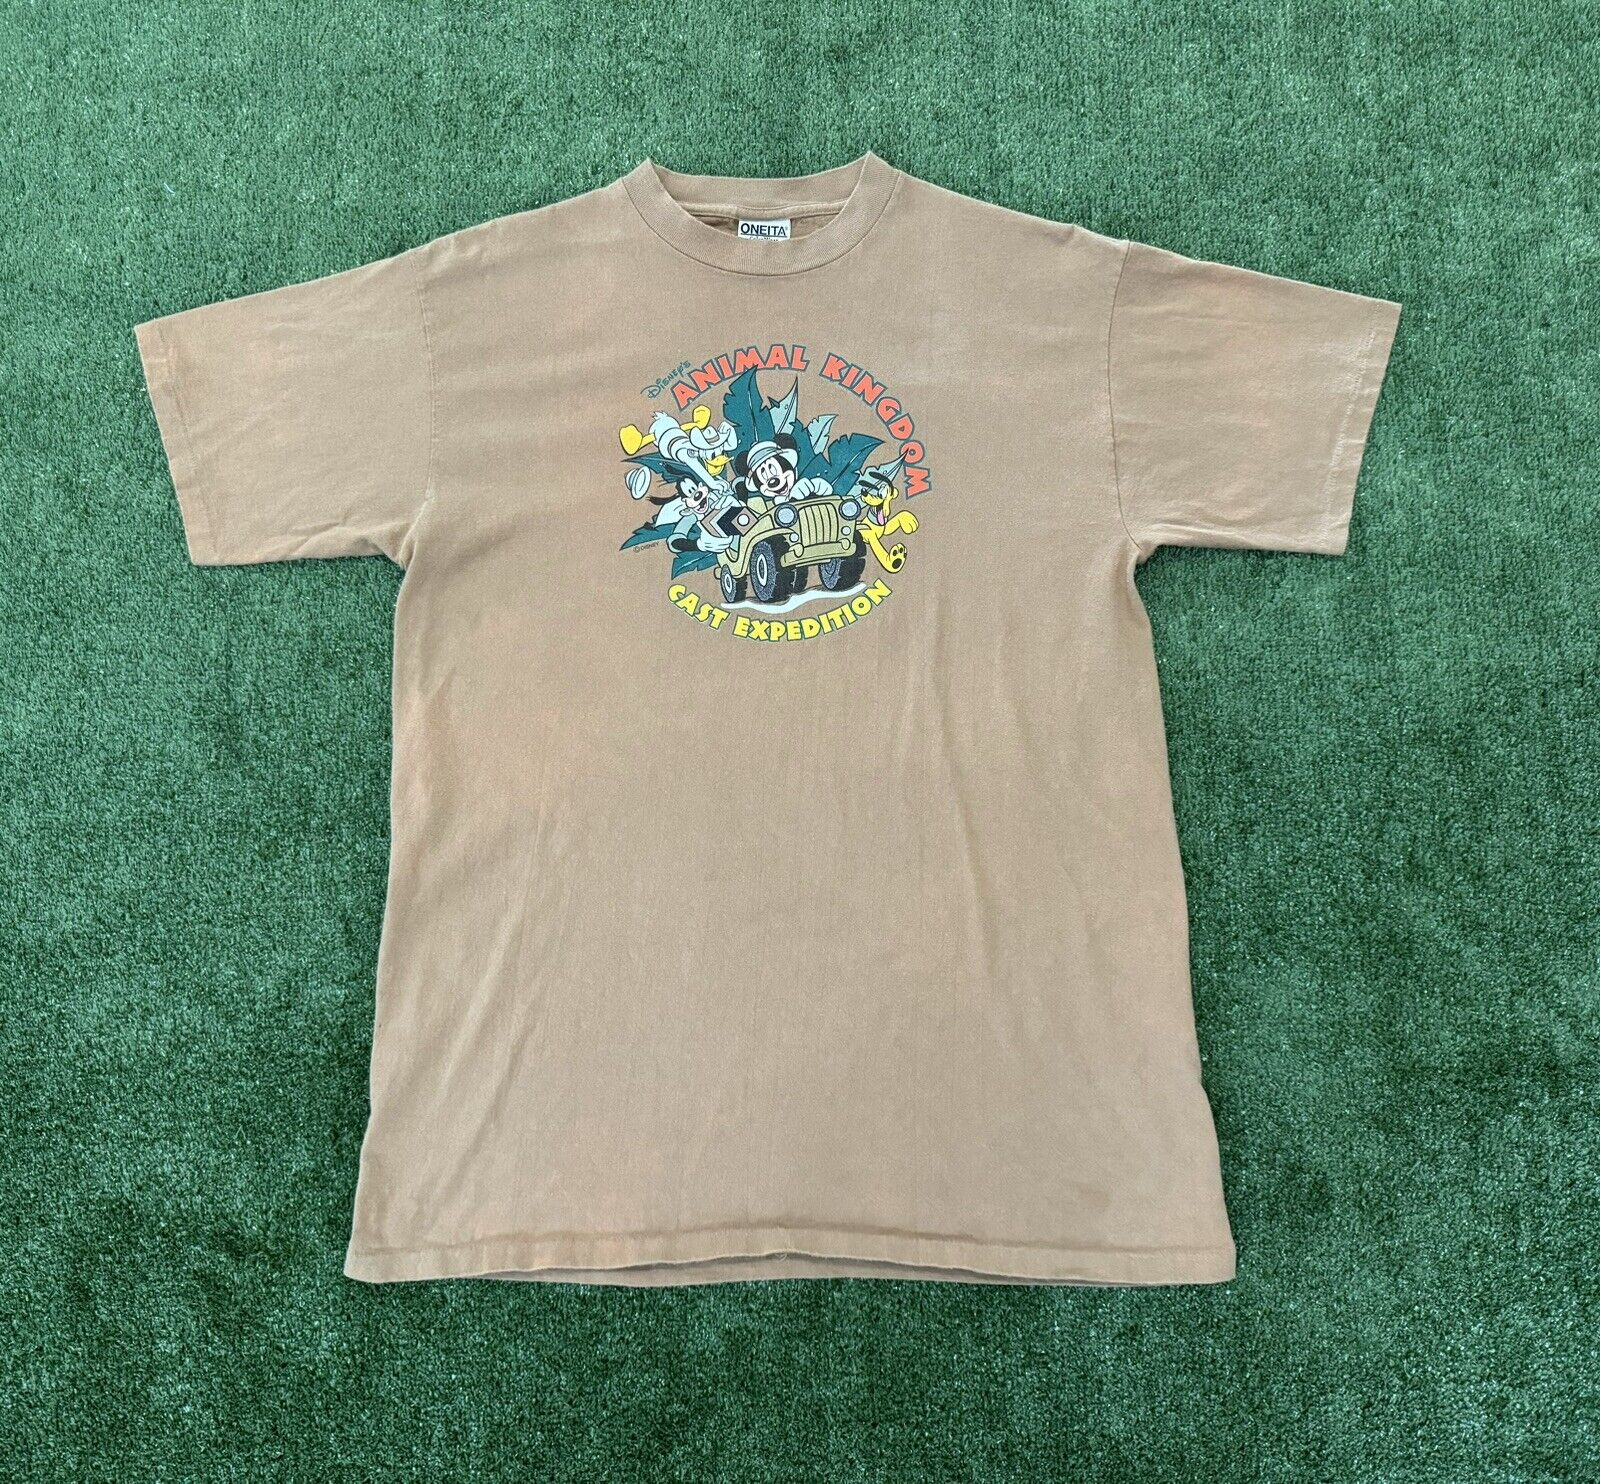 Vintage Disney Animal Kingdom Cast Expedition Shirt Size L Faded Single Stotched